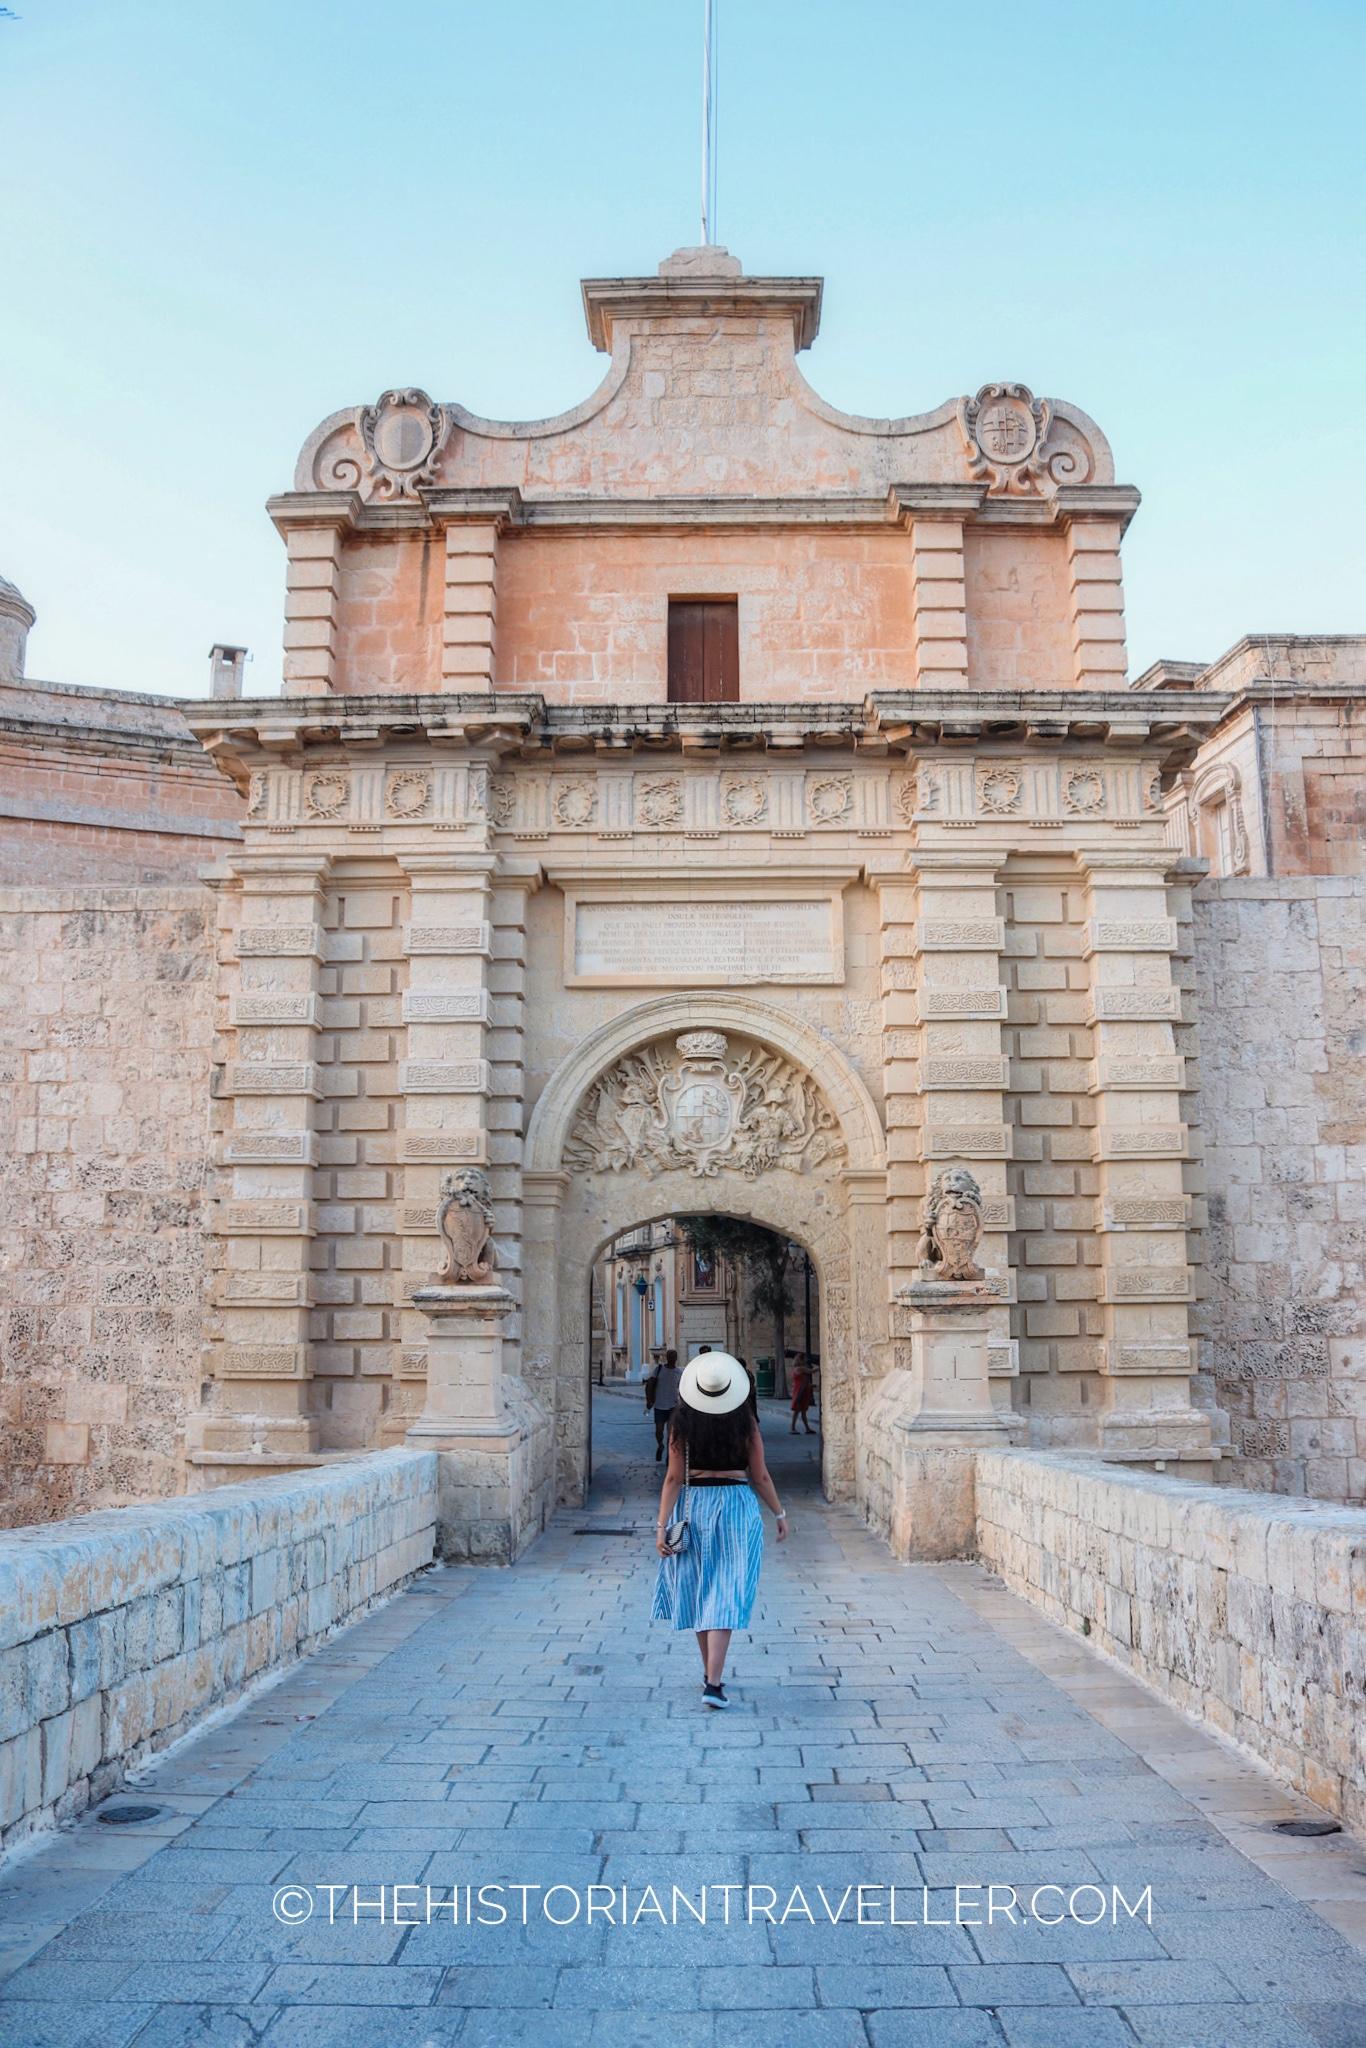 The gate of Mdina